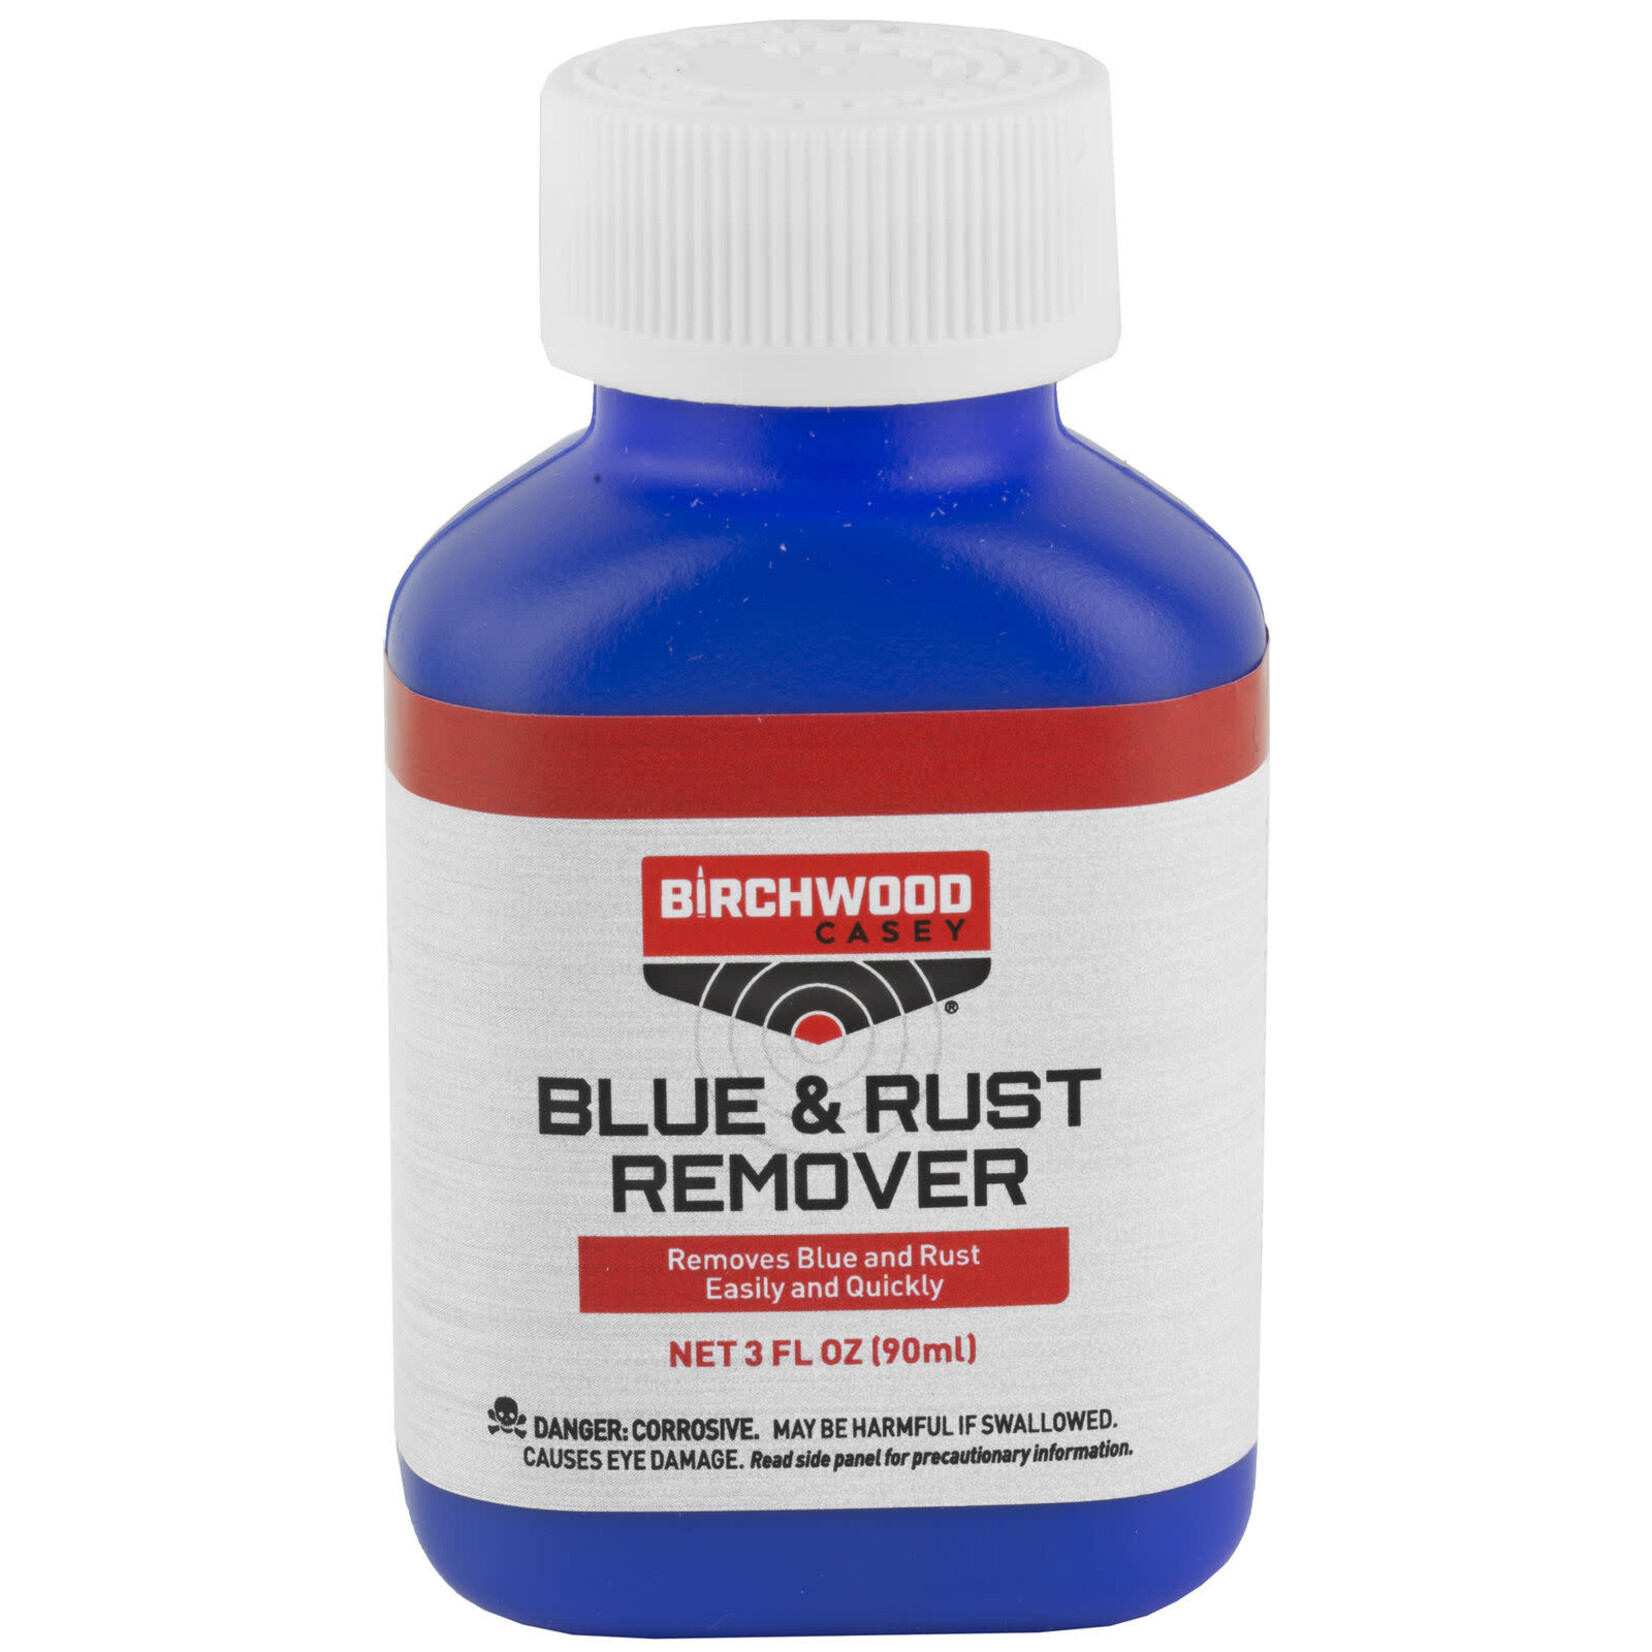 Birchwood Casey Birchwood Casey Blue & Rust Remover